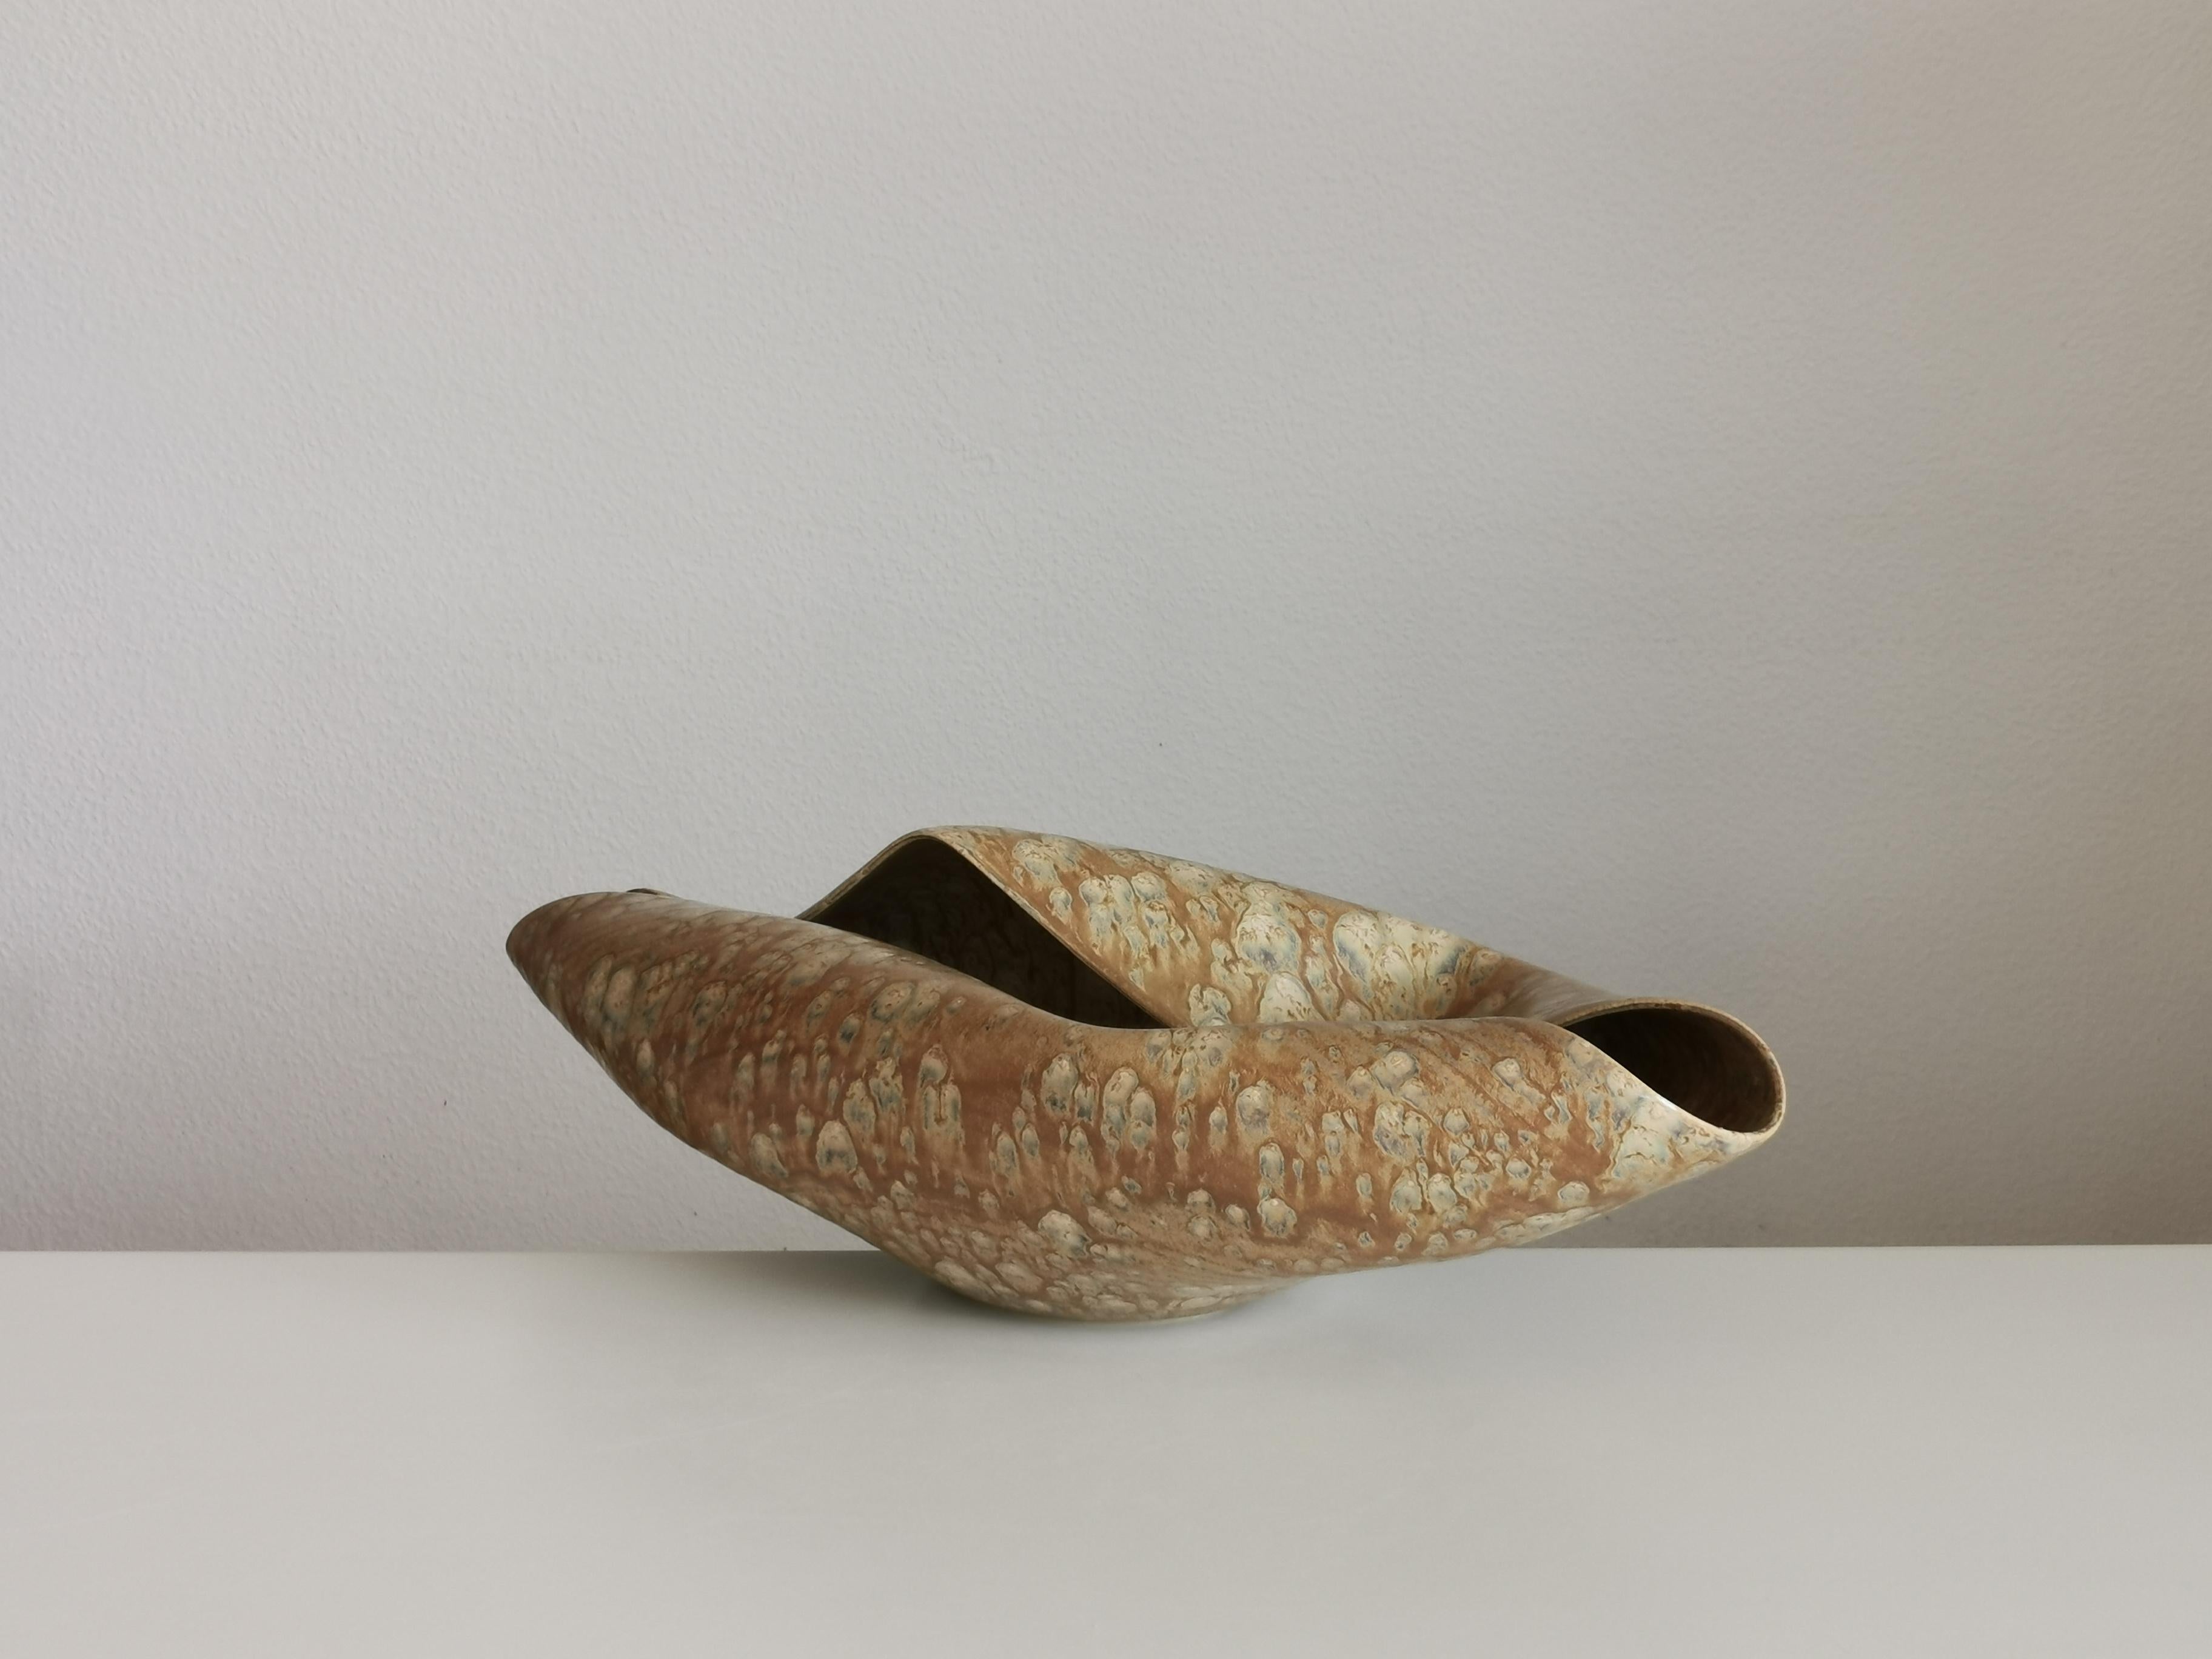 Organic Modern Wide Undulating Form with Desert Dusk Glaze, Vessel No.135, Ceramic Sculpture For Sale